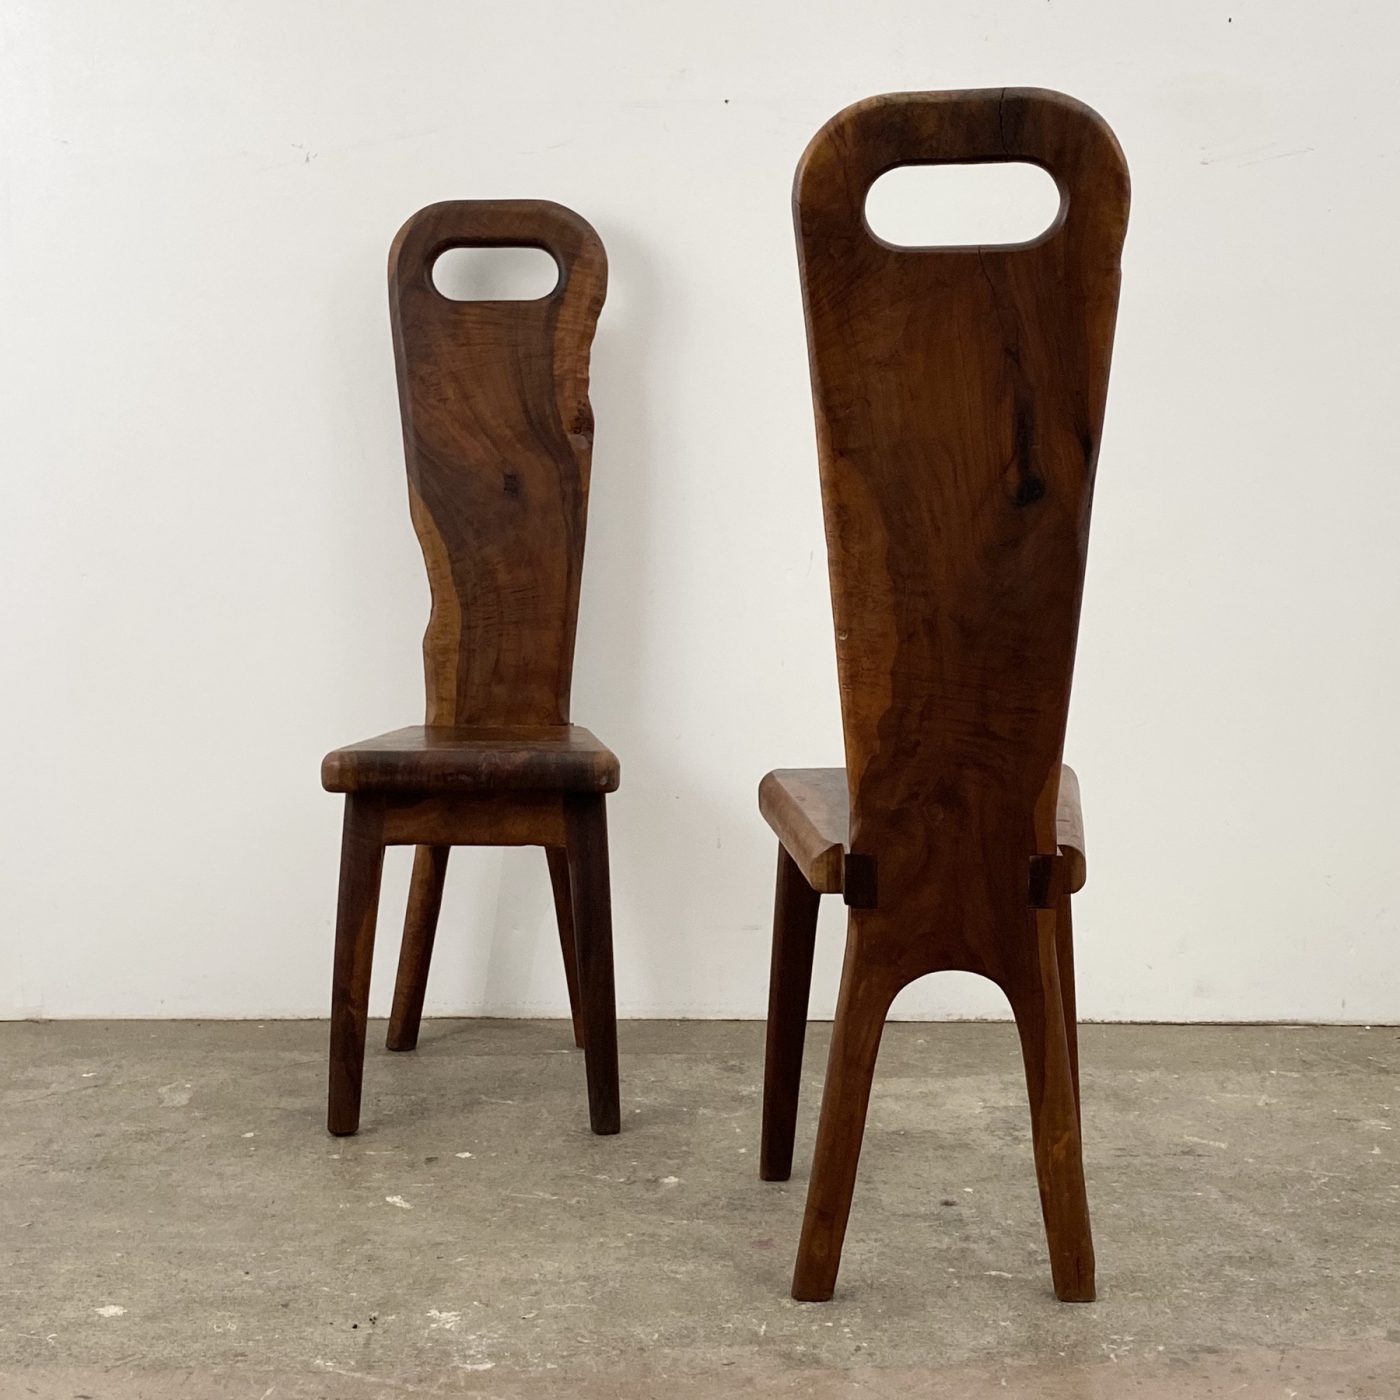 objet-vagabond-olive-chairs0001